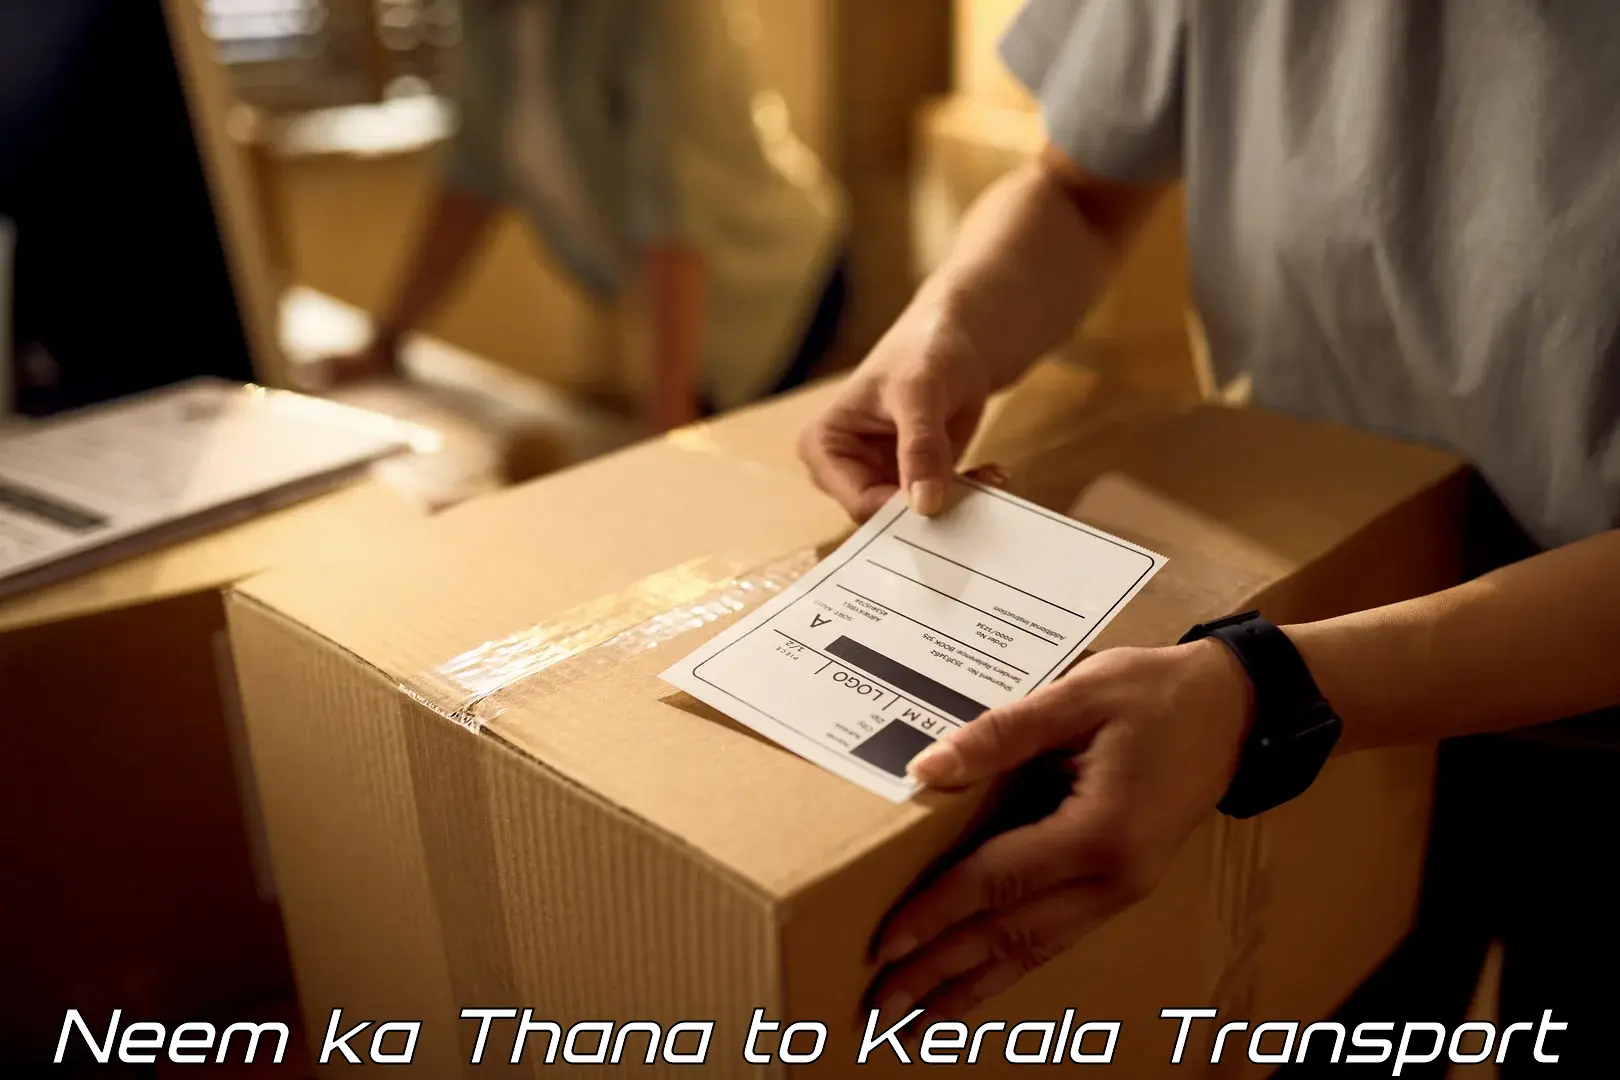 Transport in sharing Neem ka Thana to Chungatra